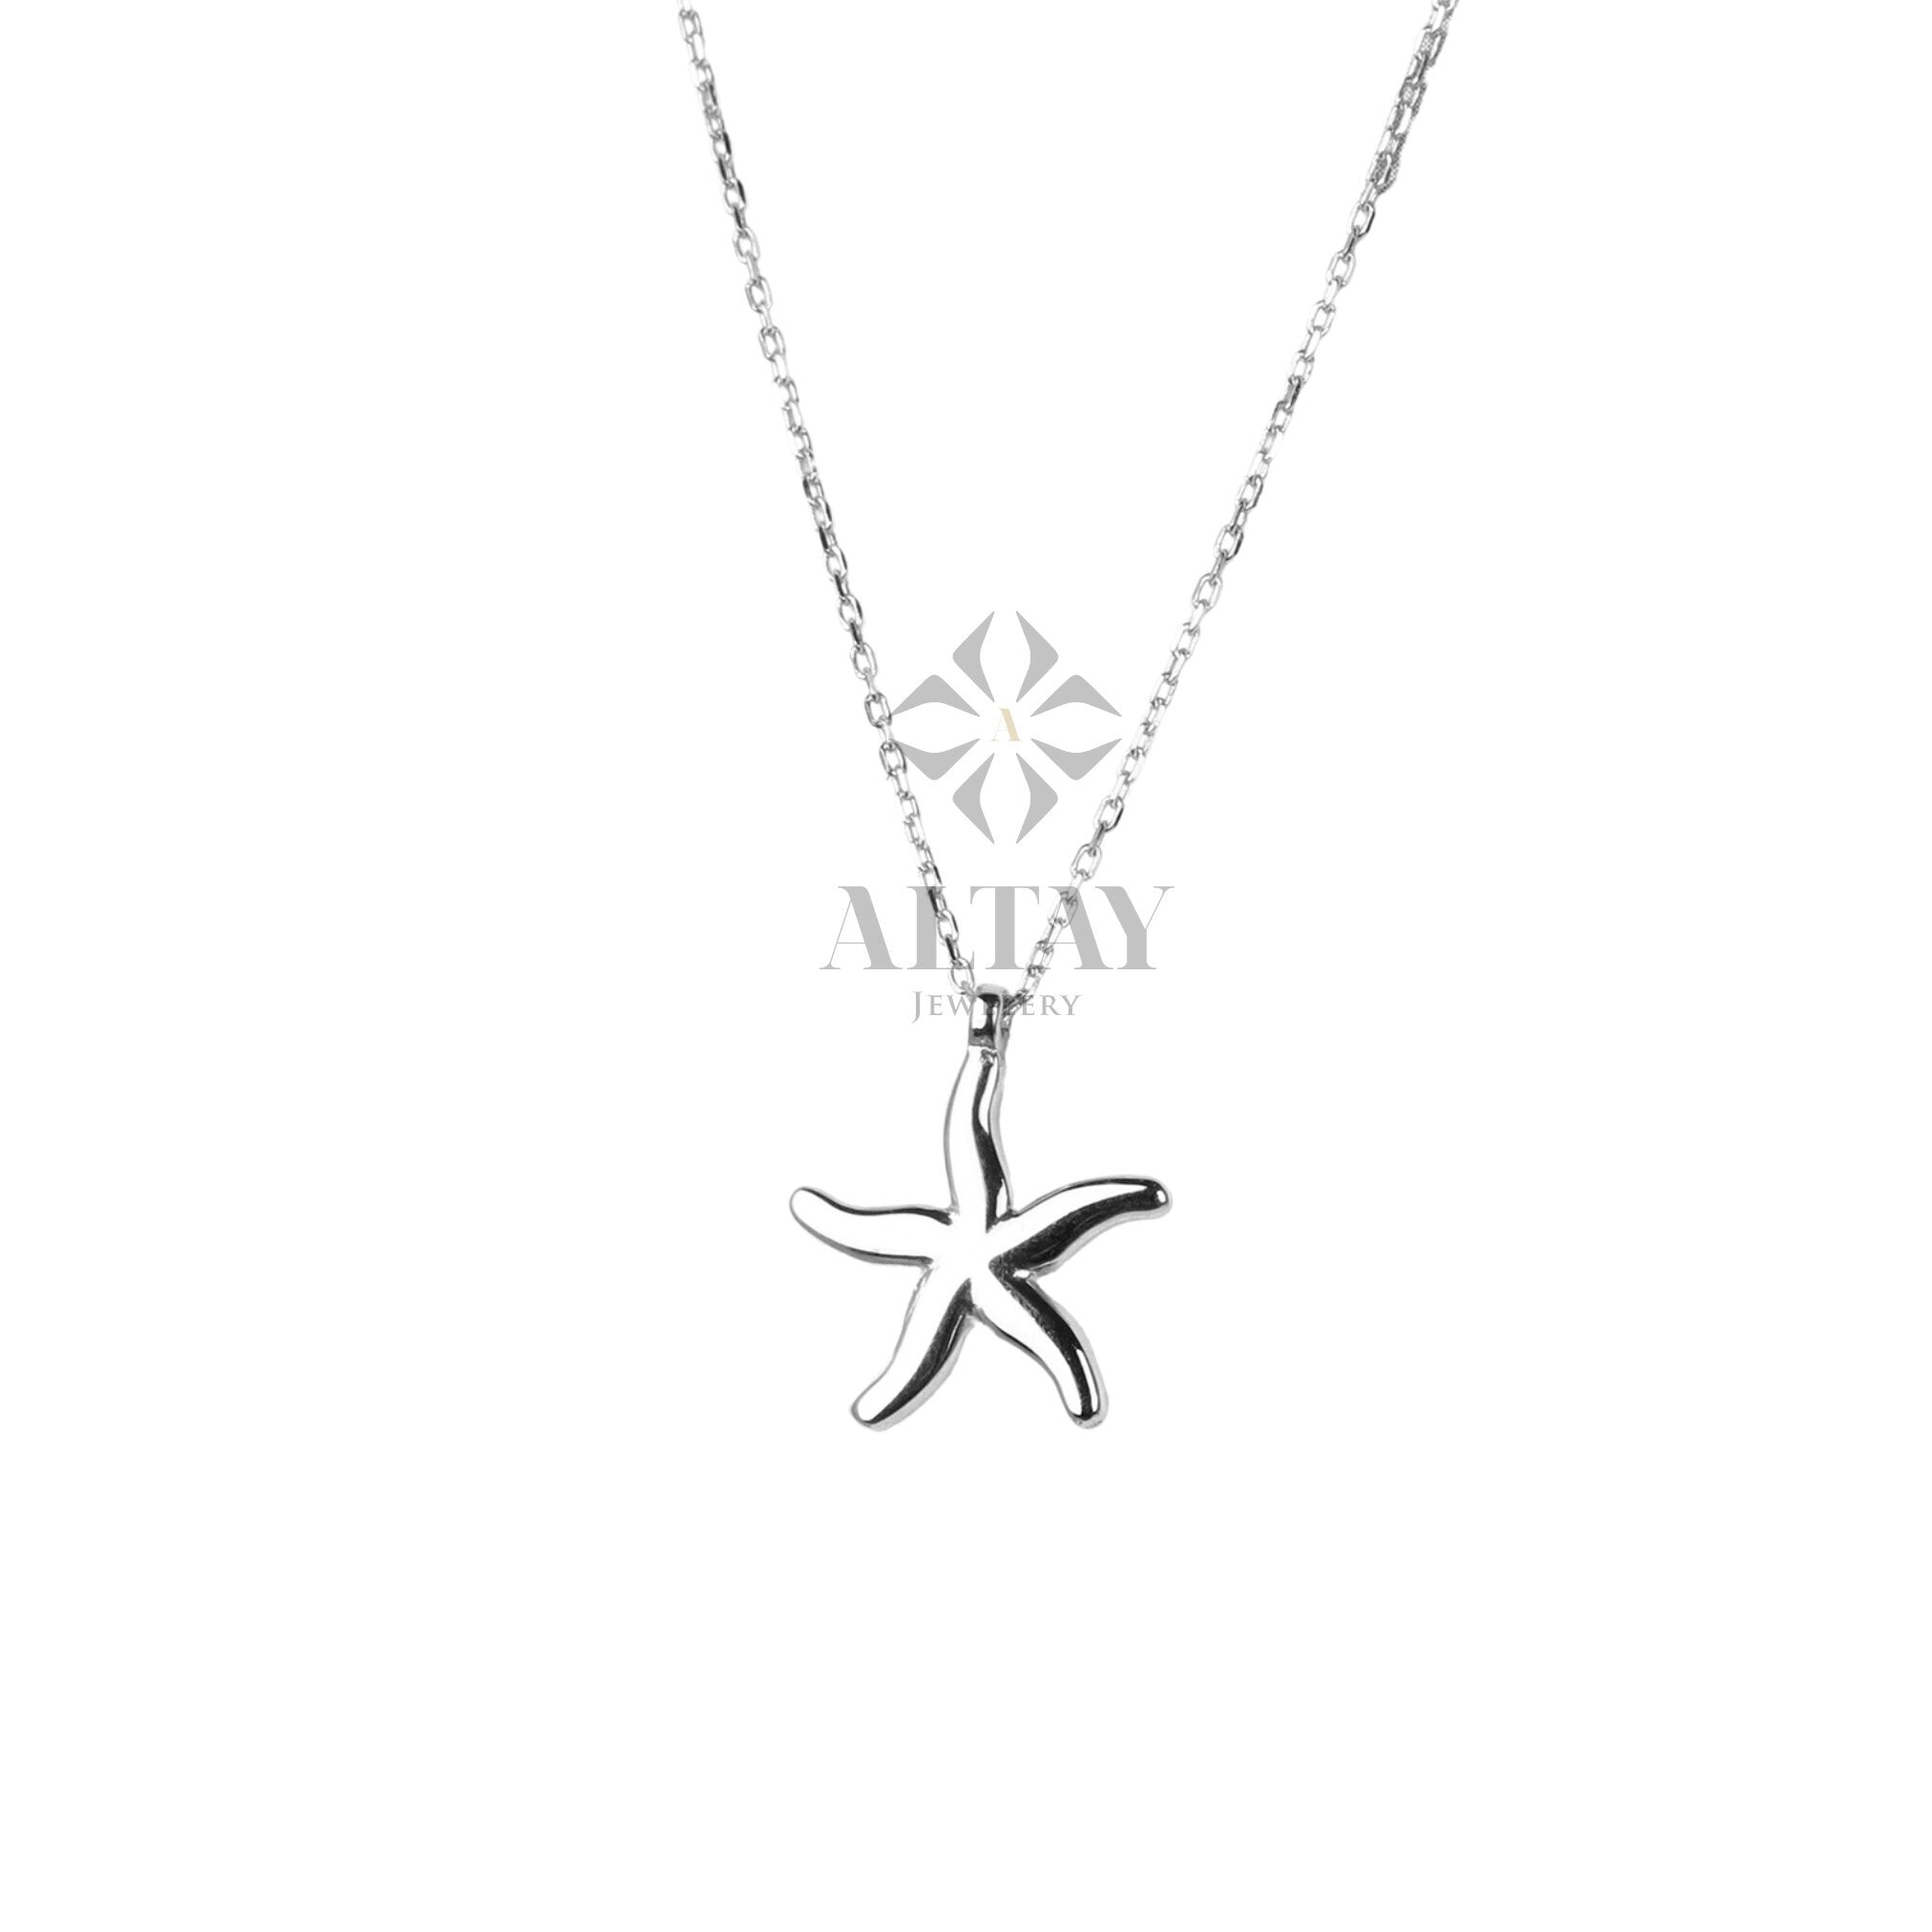 14K Gold Starfish Necklace, Tiny Starfish Pendant, Gold Starfish Charm,Star Sign Necklace, Delicate Starfish Choker, Beach Jewelry